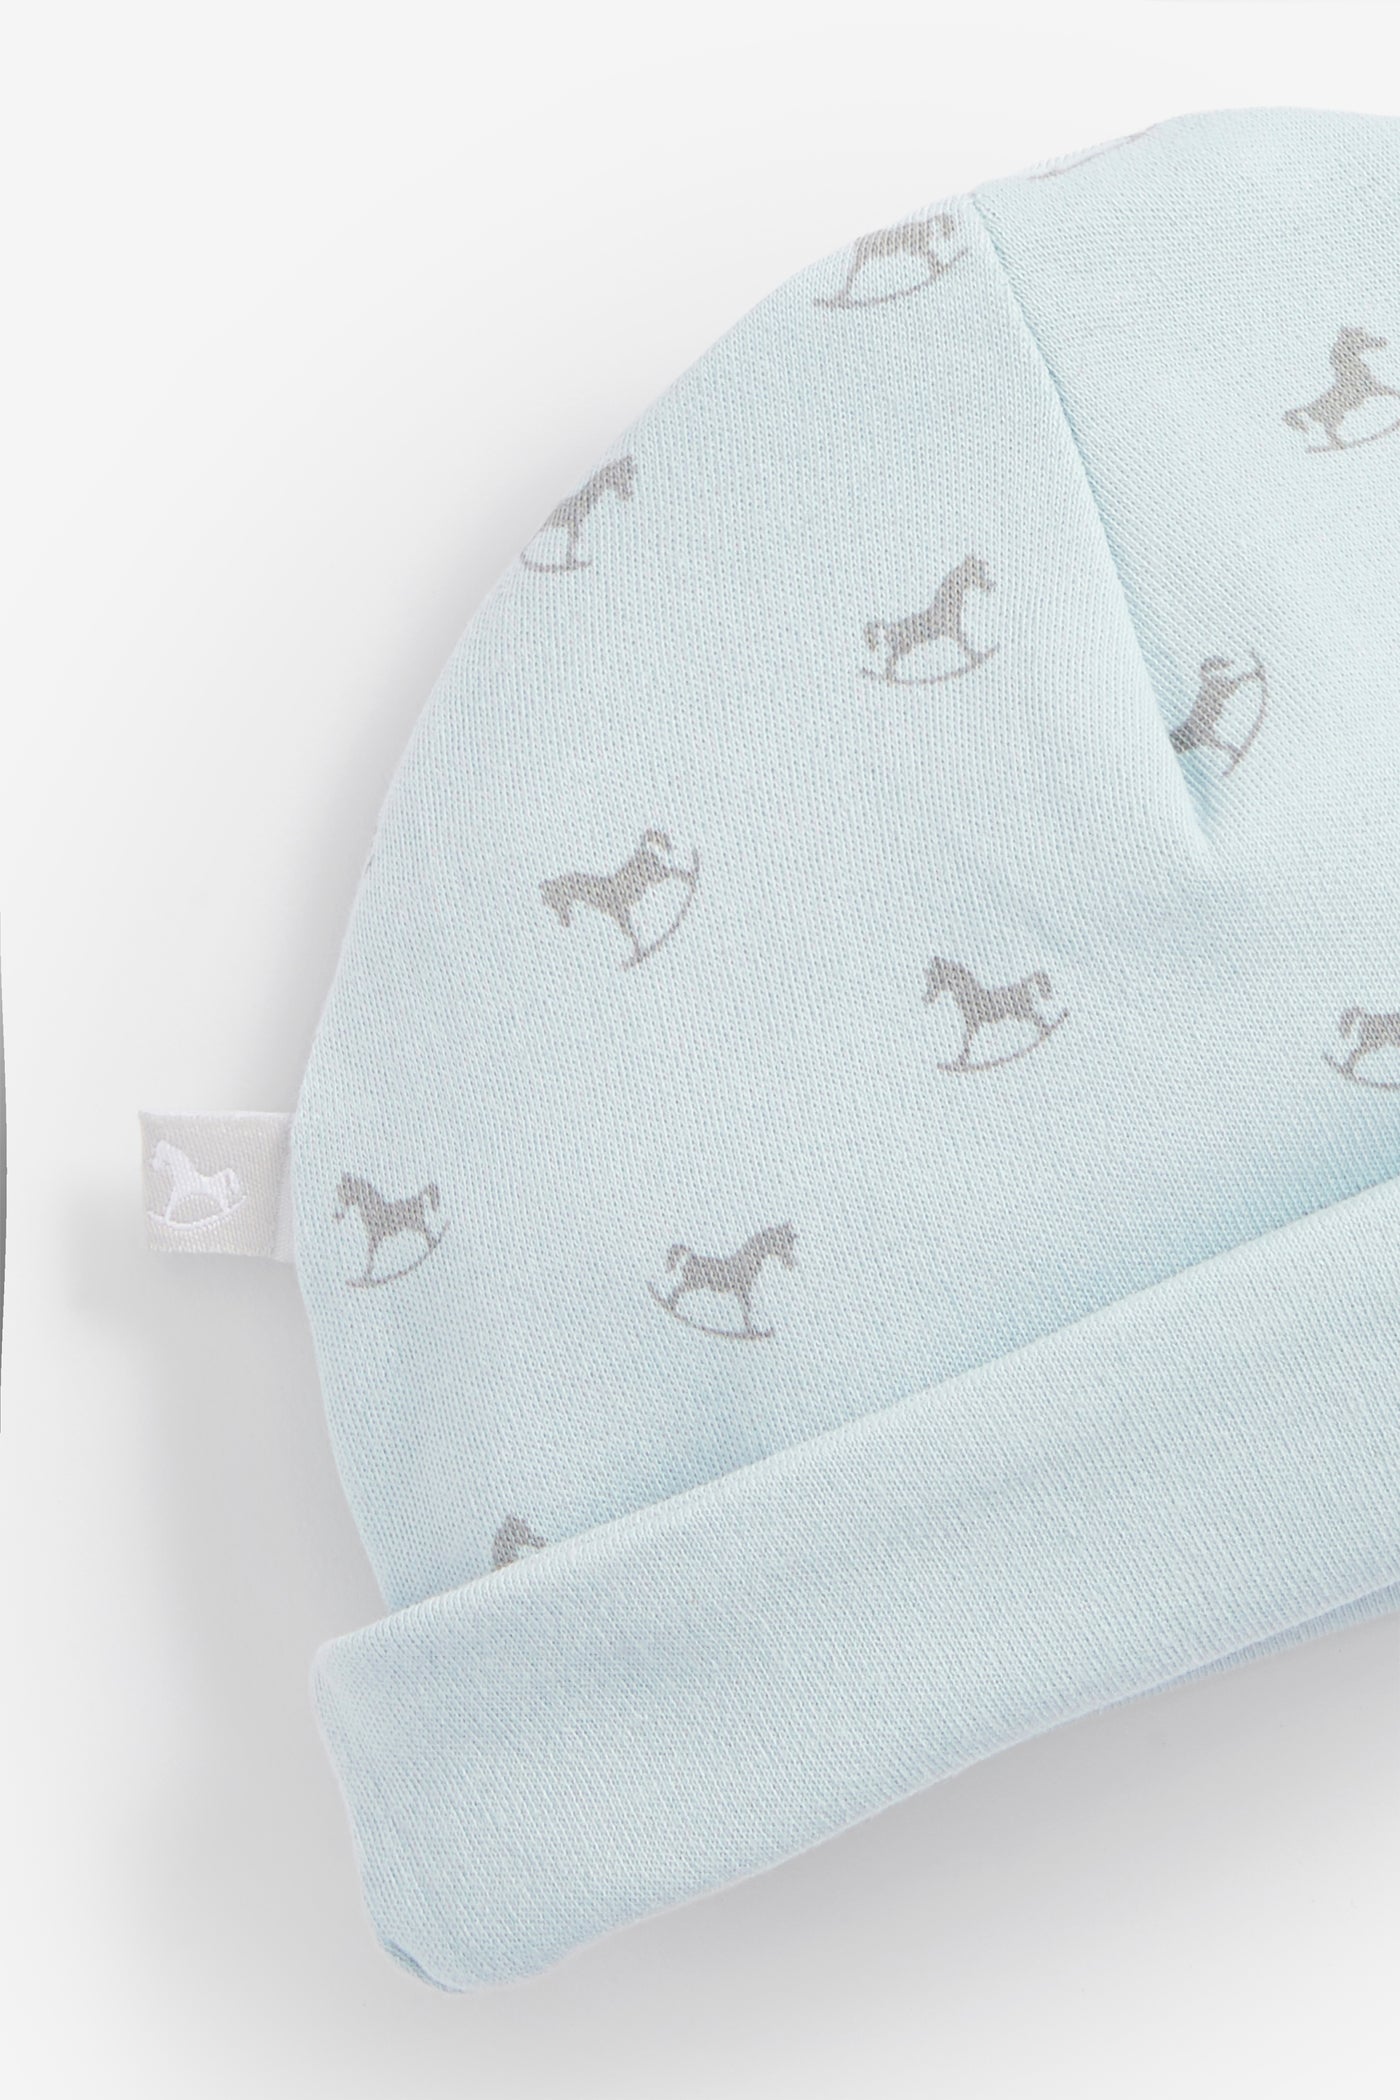 Super Soft Jersey Sleep Suit, Hat, Blanket, Comforter And Booties Gift Set - blue